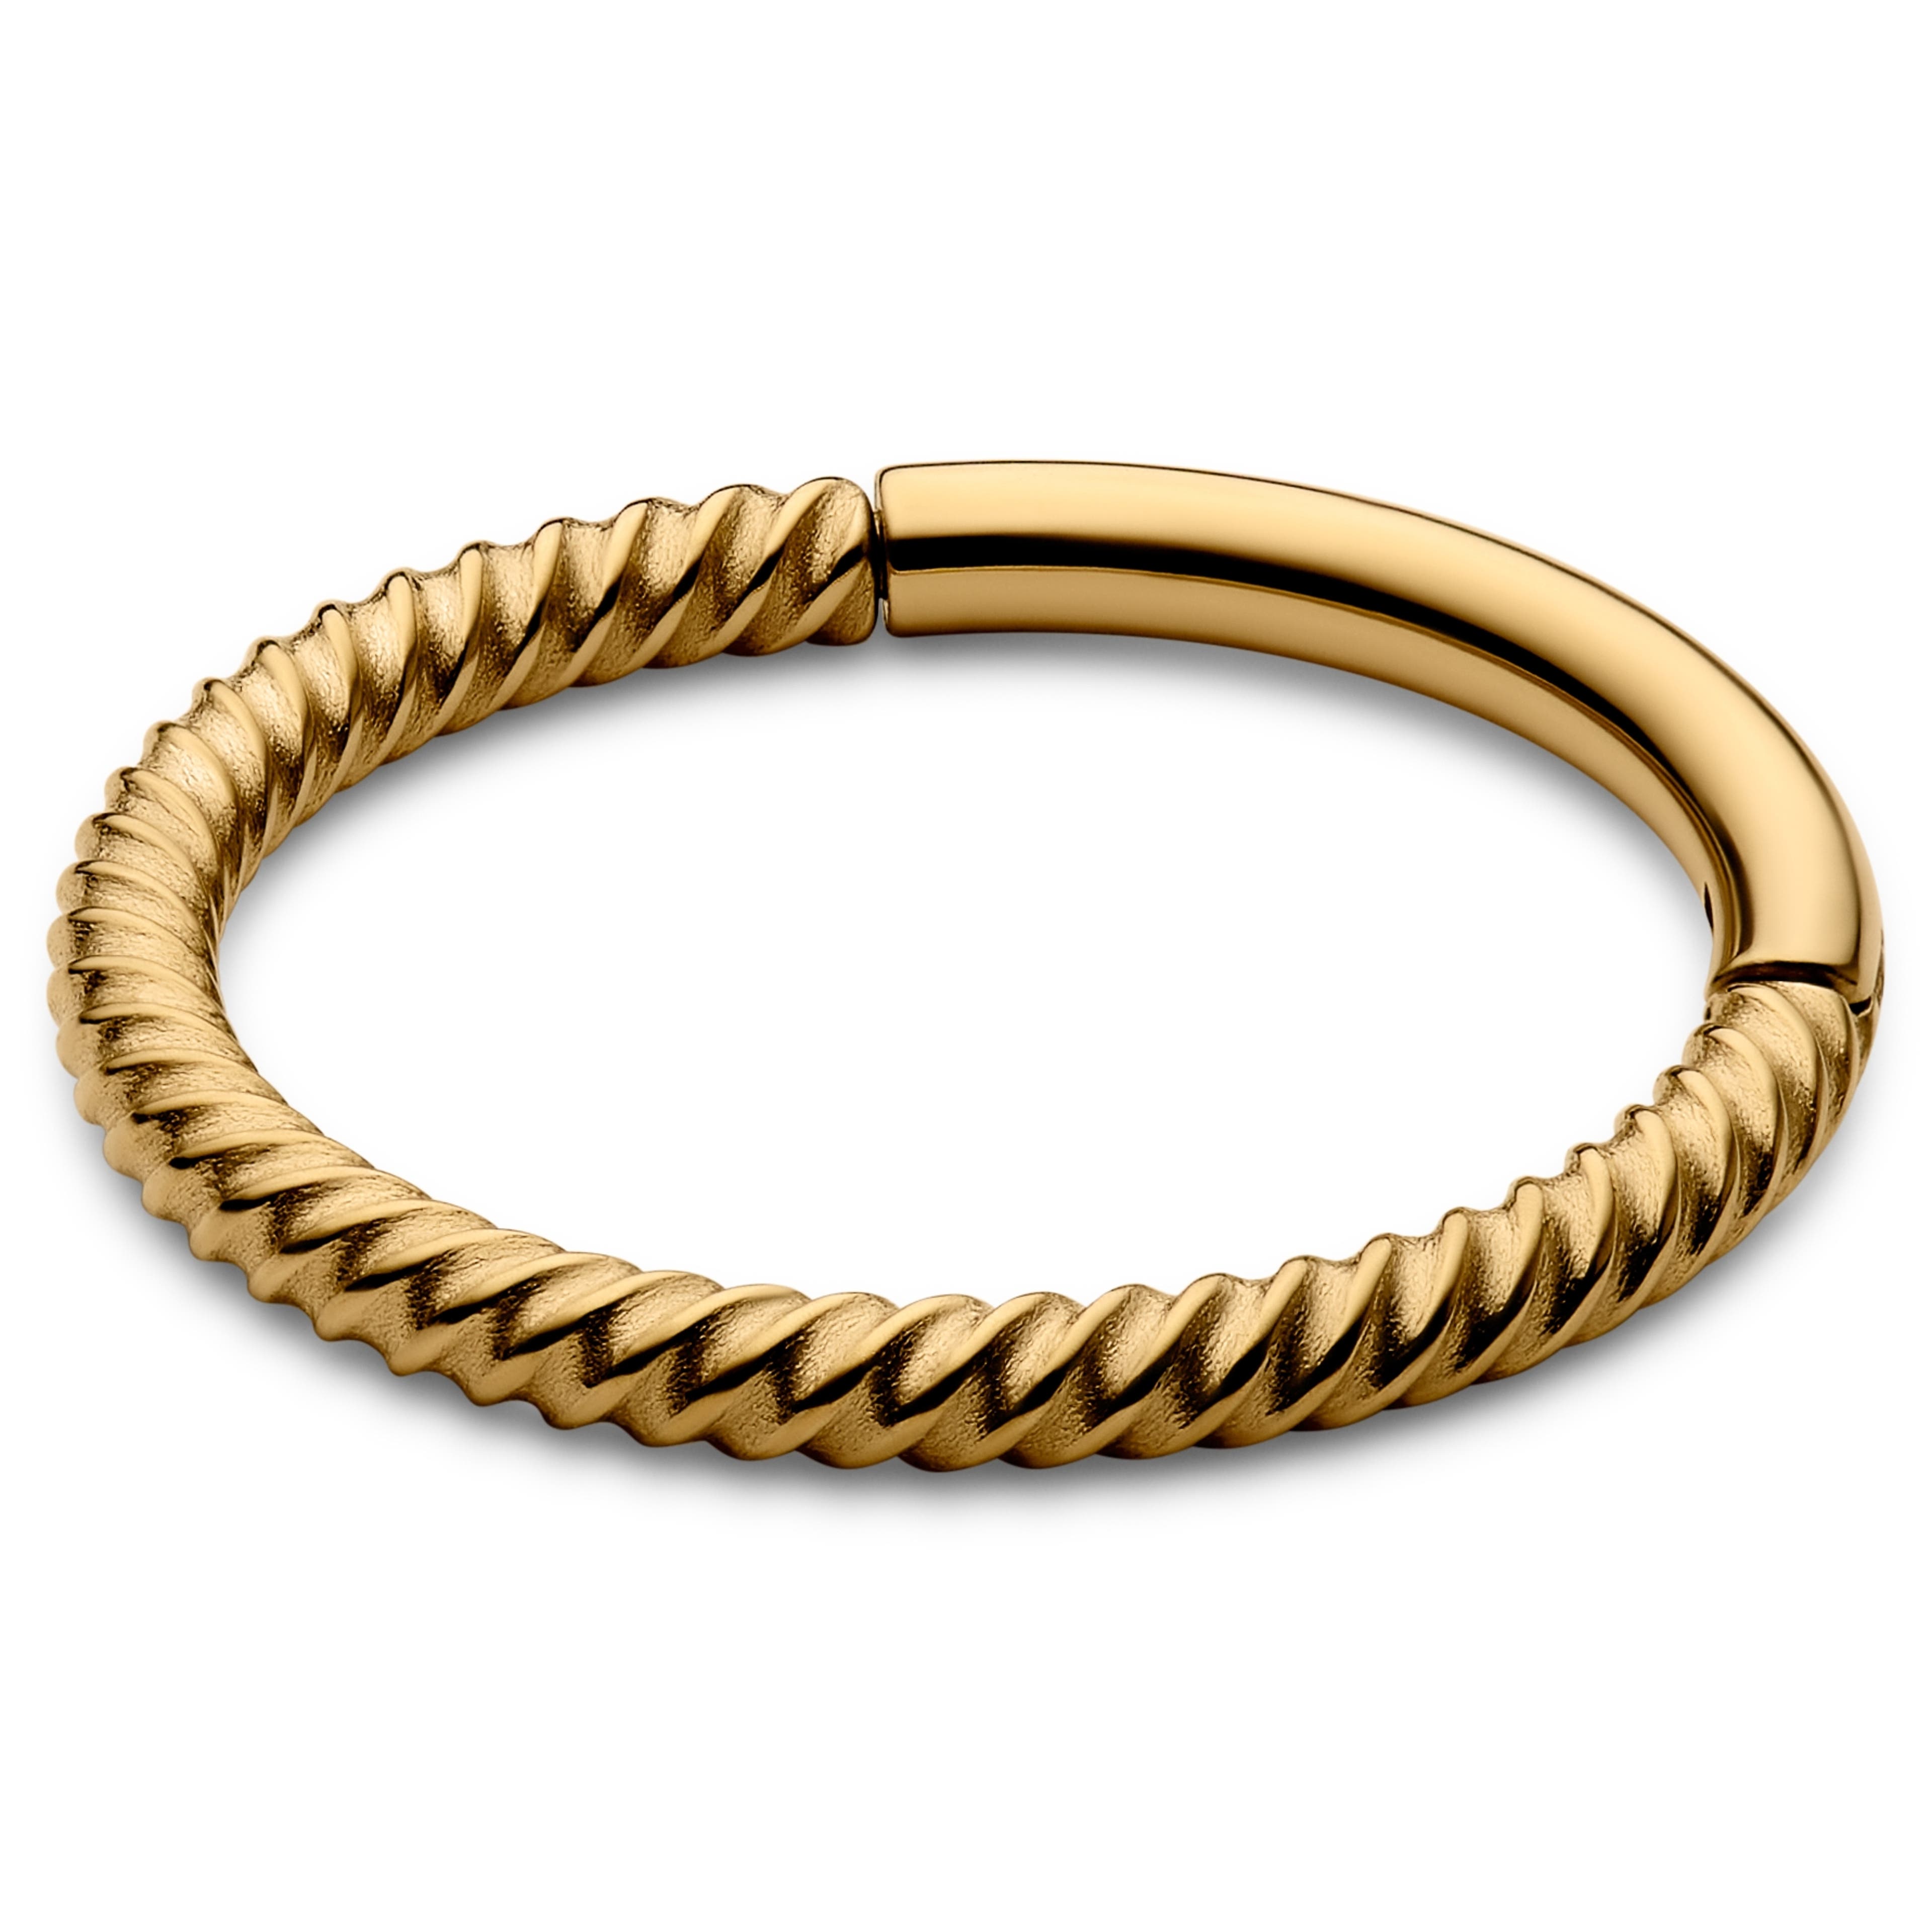 10mm piercing segment stáčený kroužek z chirurgické oceli zlaté barvy 